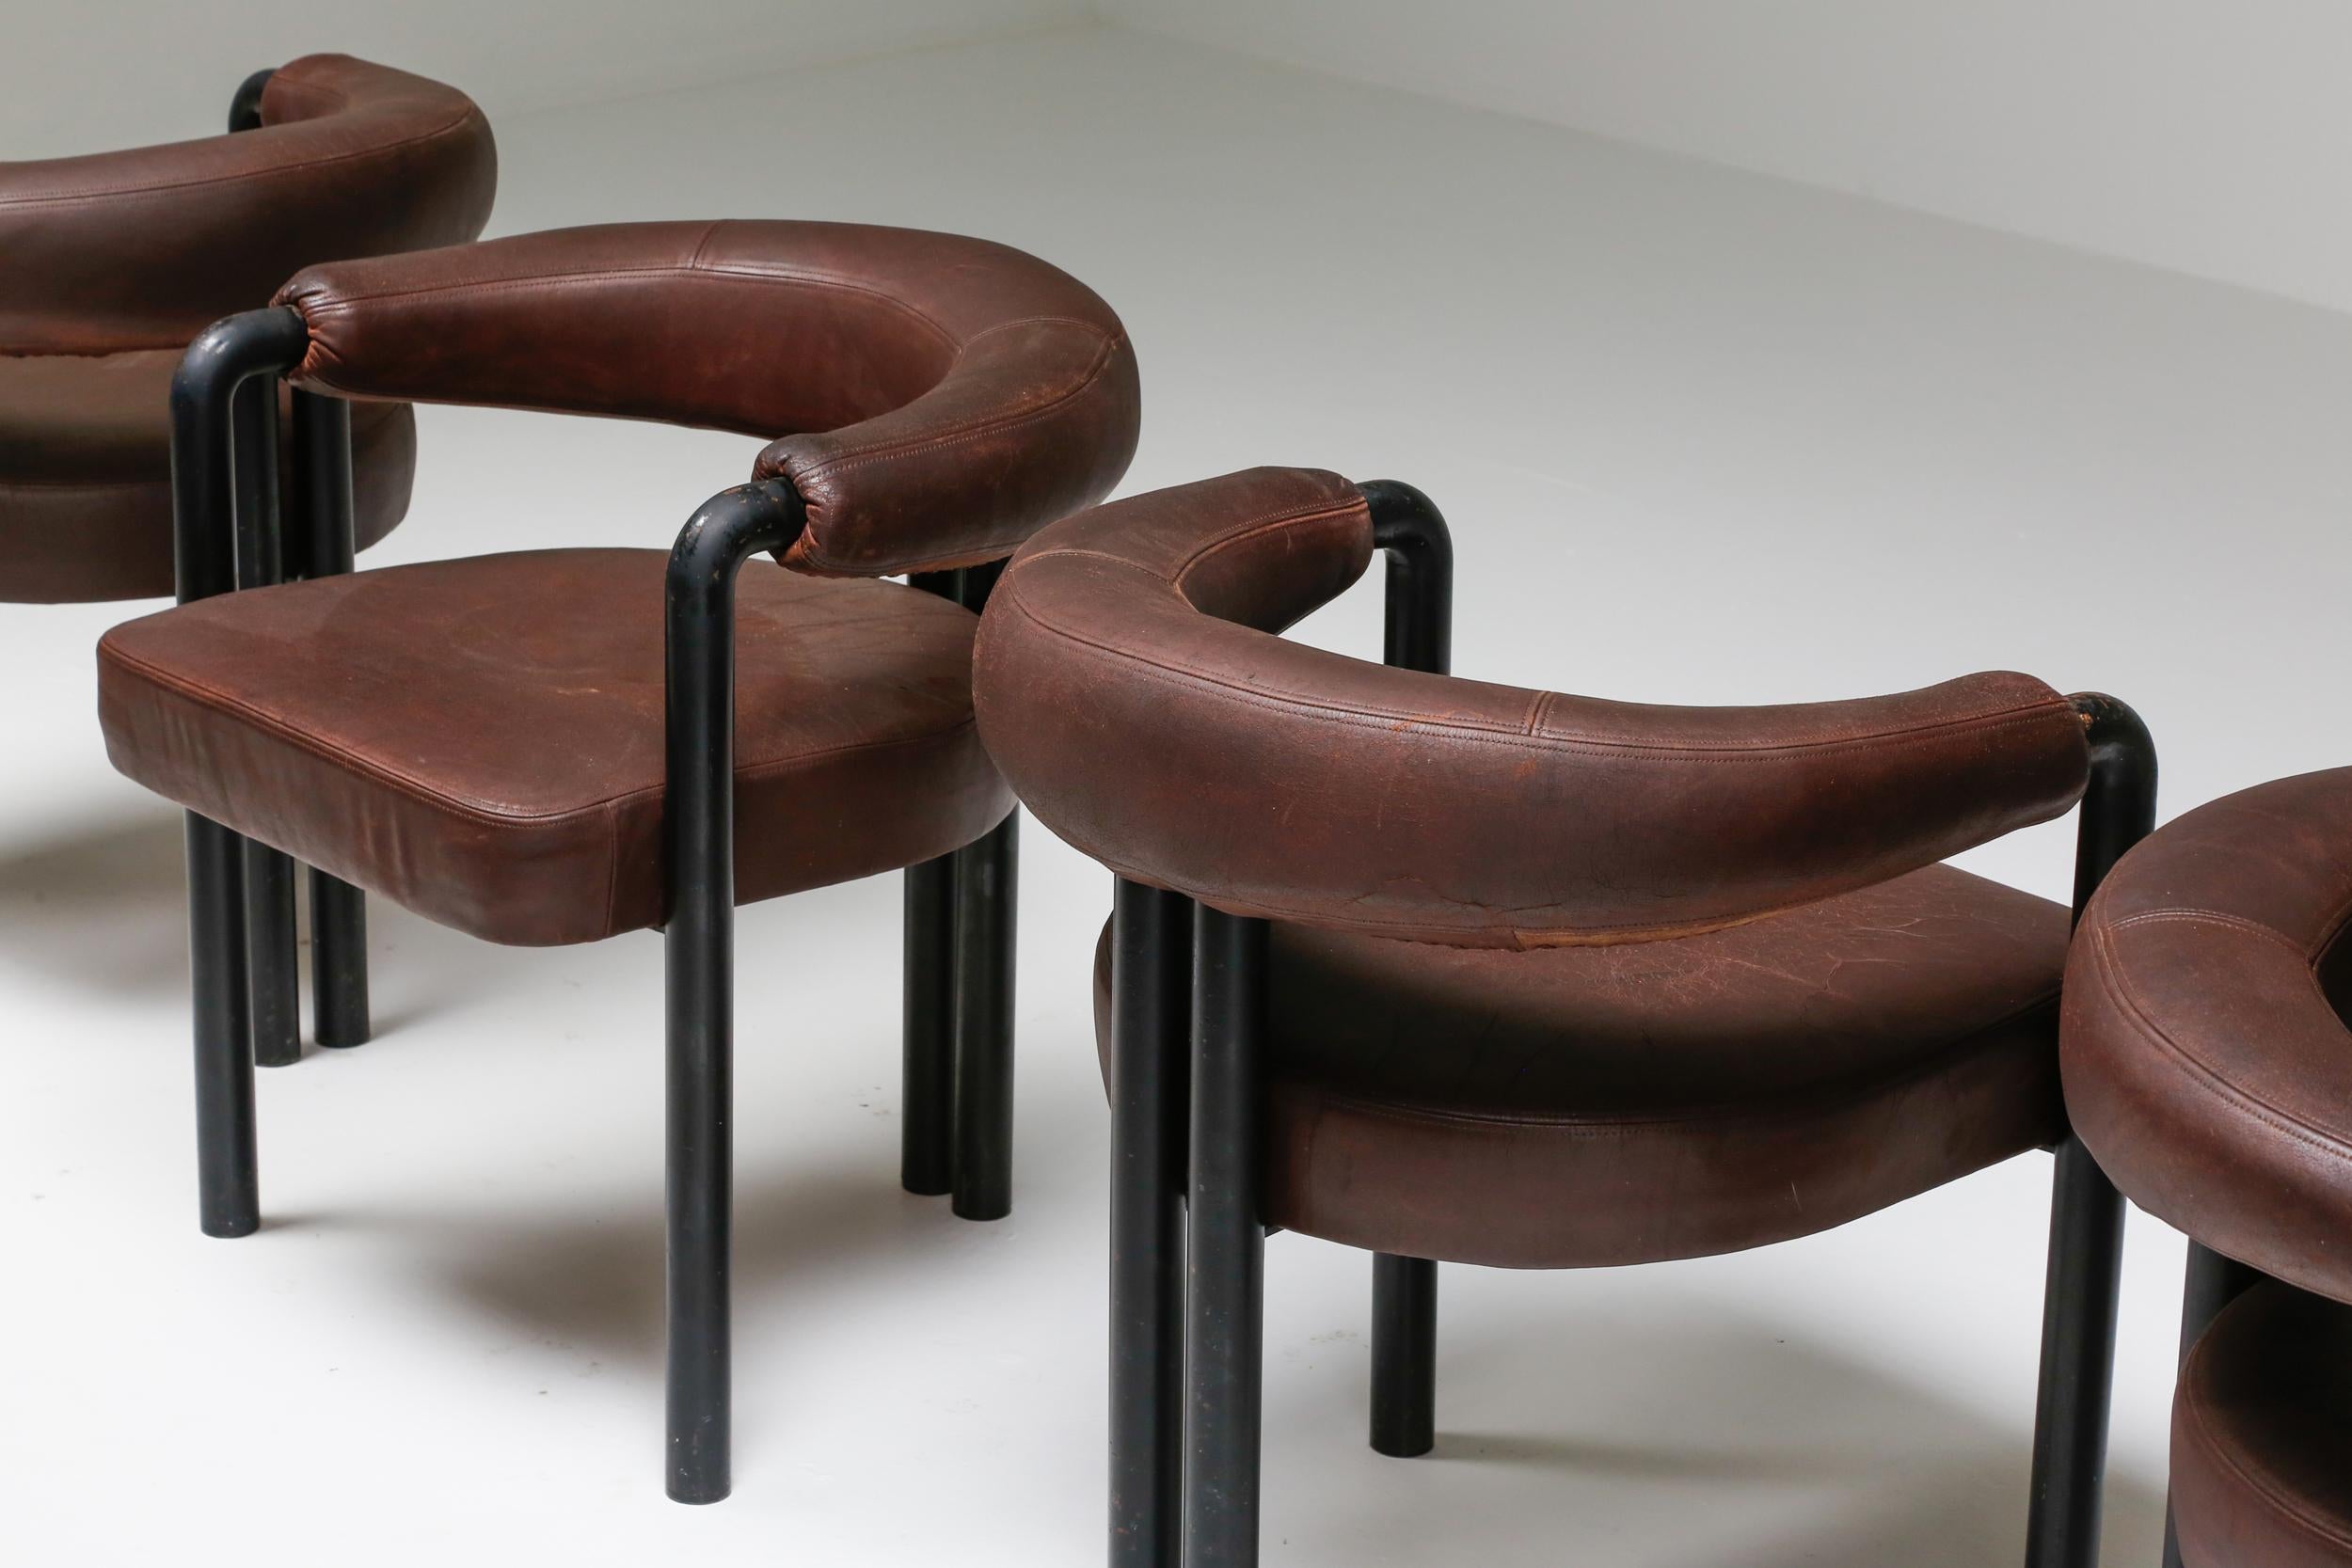 Mid-Century Modern De Sede Dining Chairs by Nienkamper in Brown Leather and Black Tubular Steel